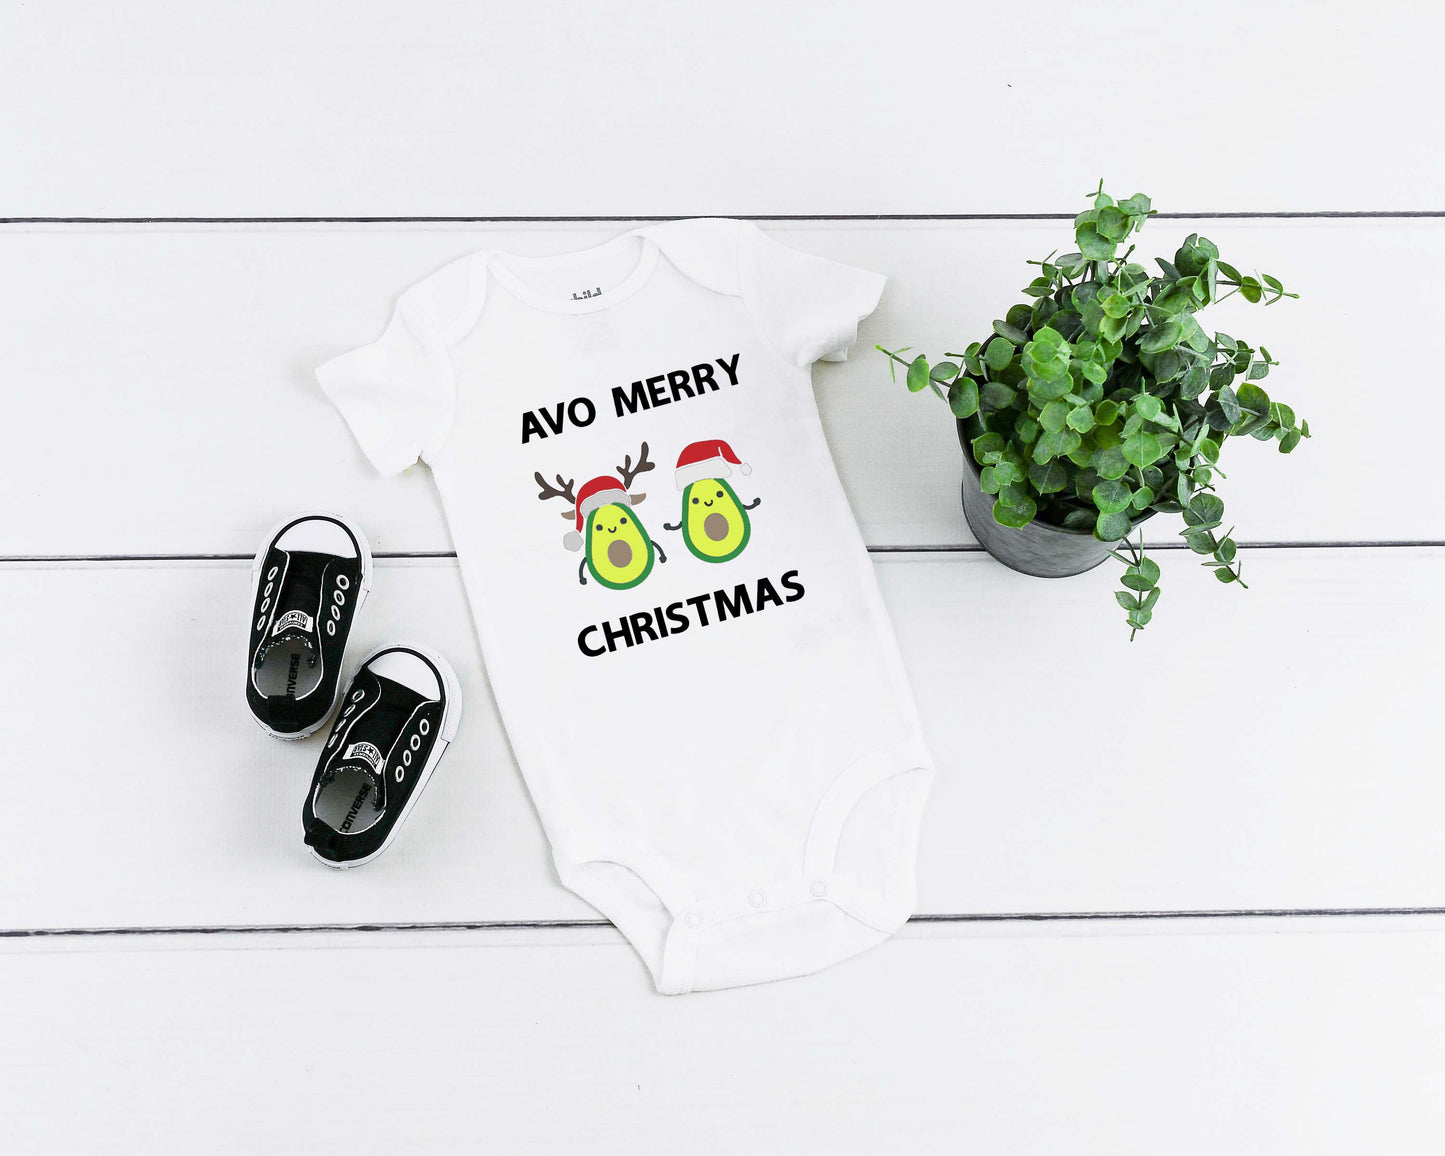 Avo Merry Christmas Adult/ Kid's/ Baby Christmas T-Shirt/ Romper